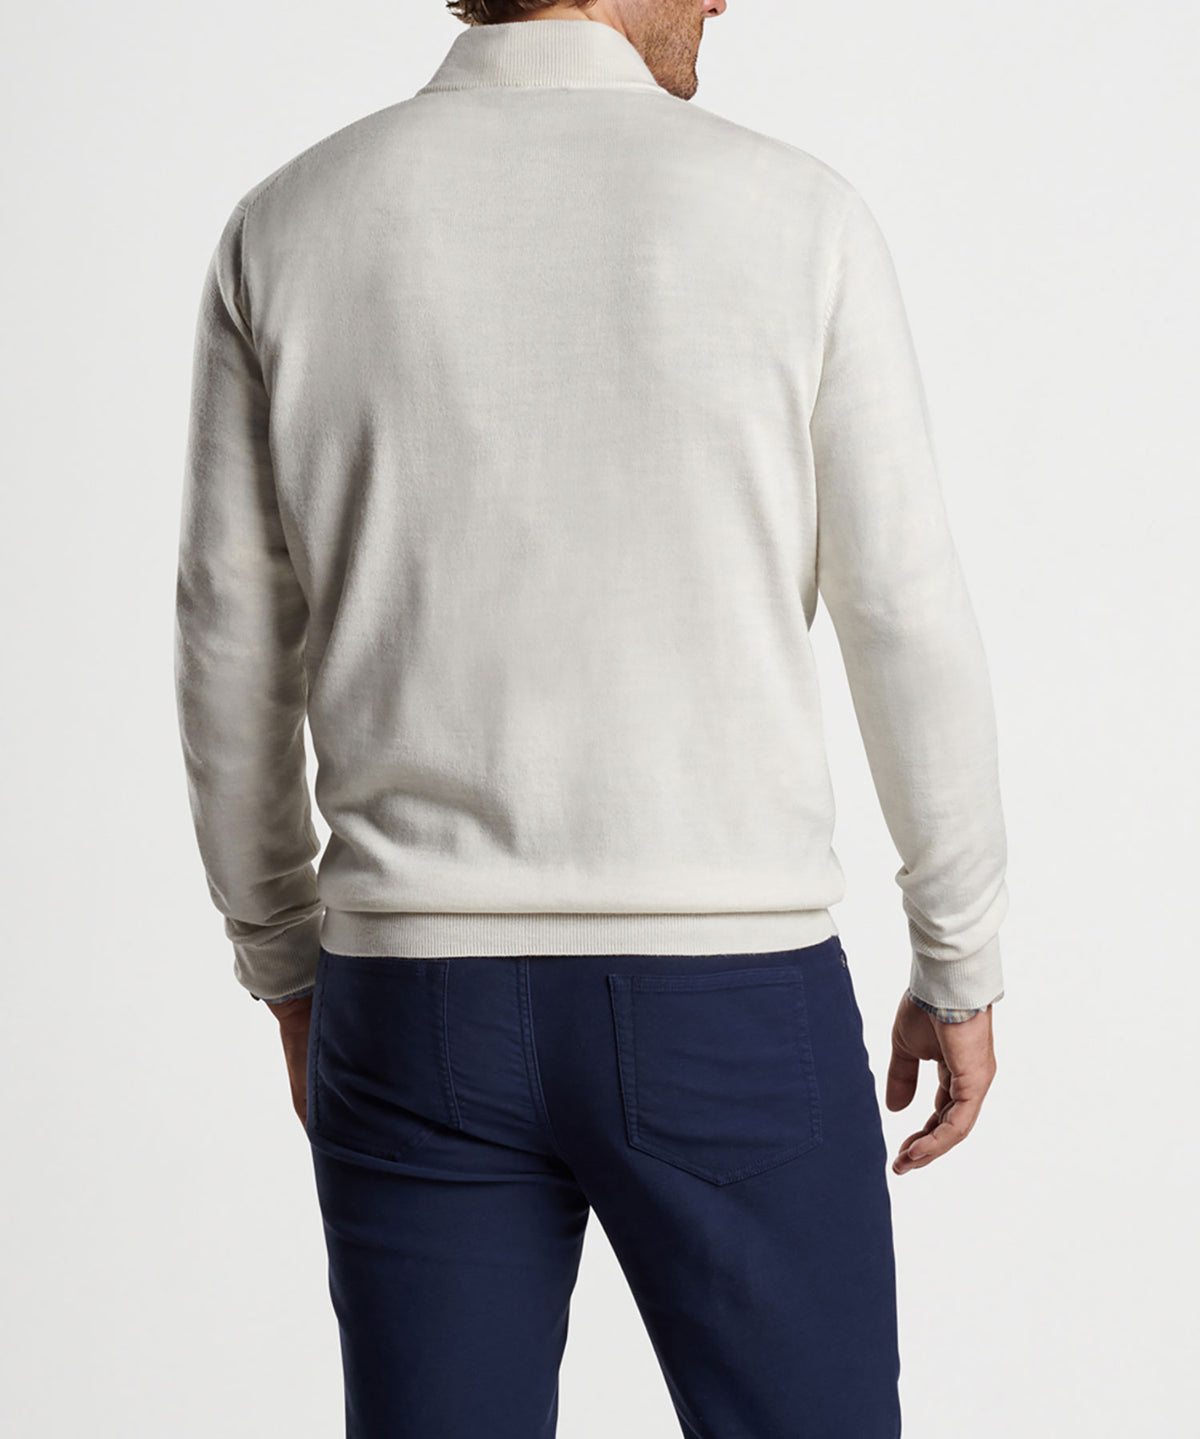 Peter Millar Suede Trim Quarter-Zip Sweater, Men's Big & Tall